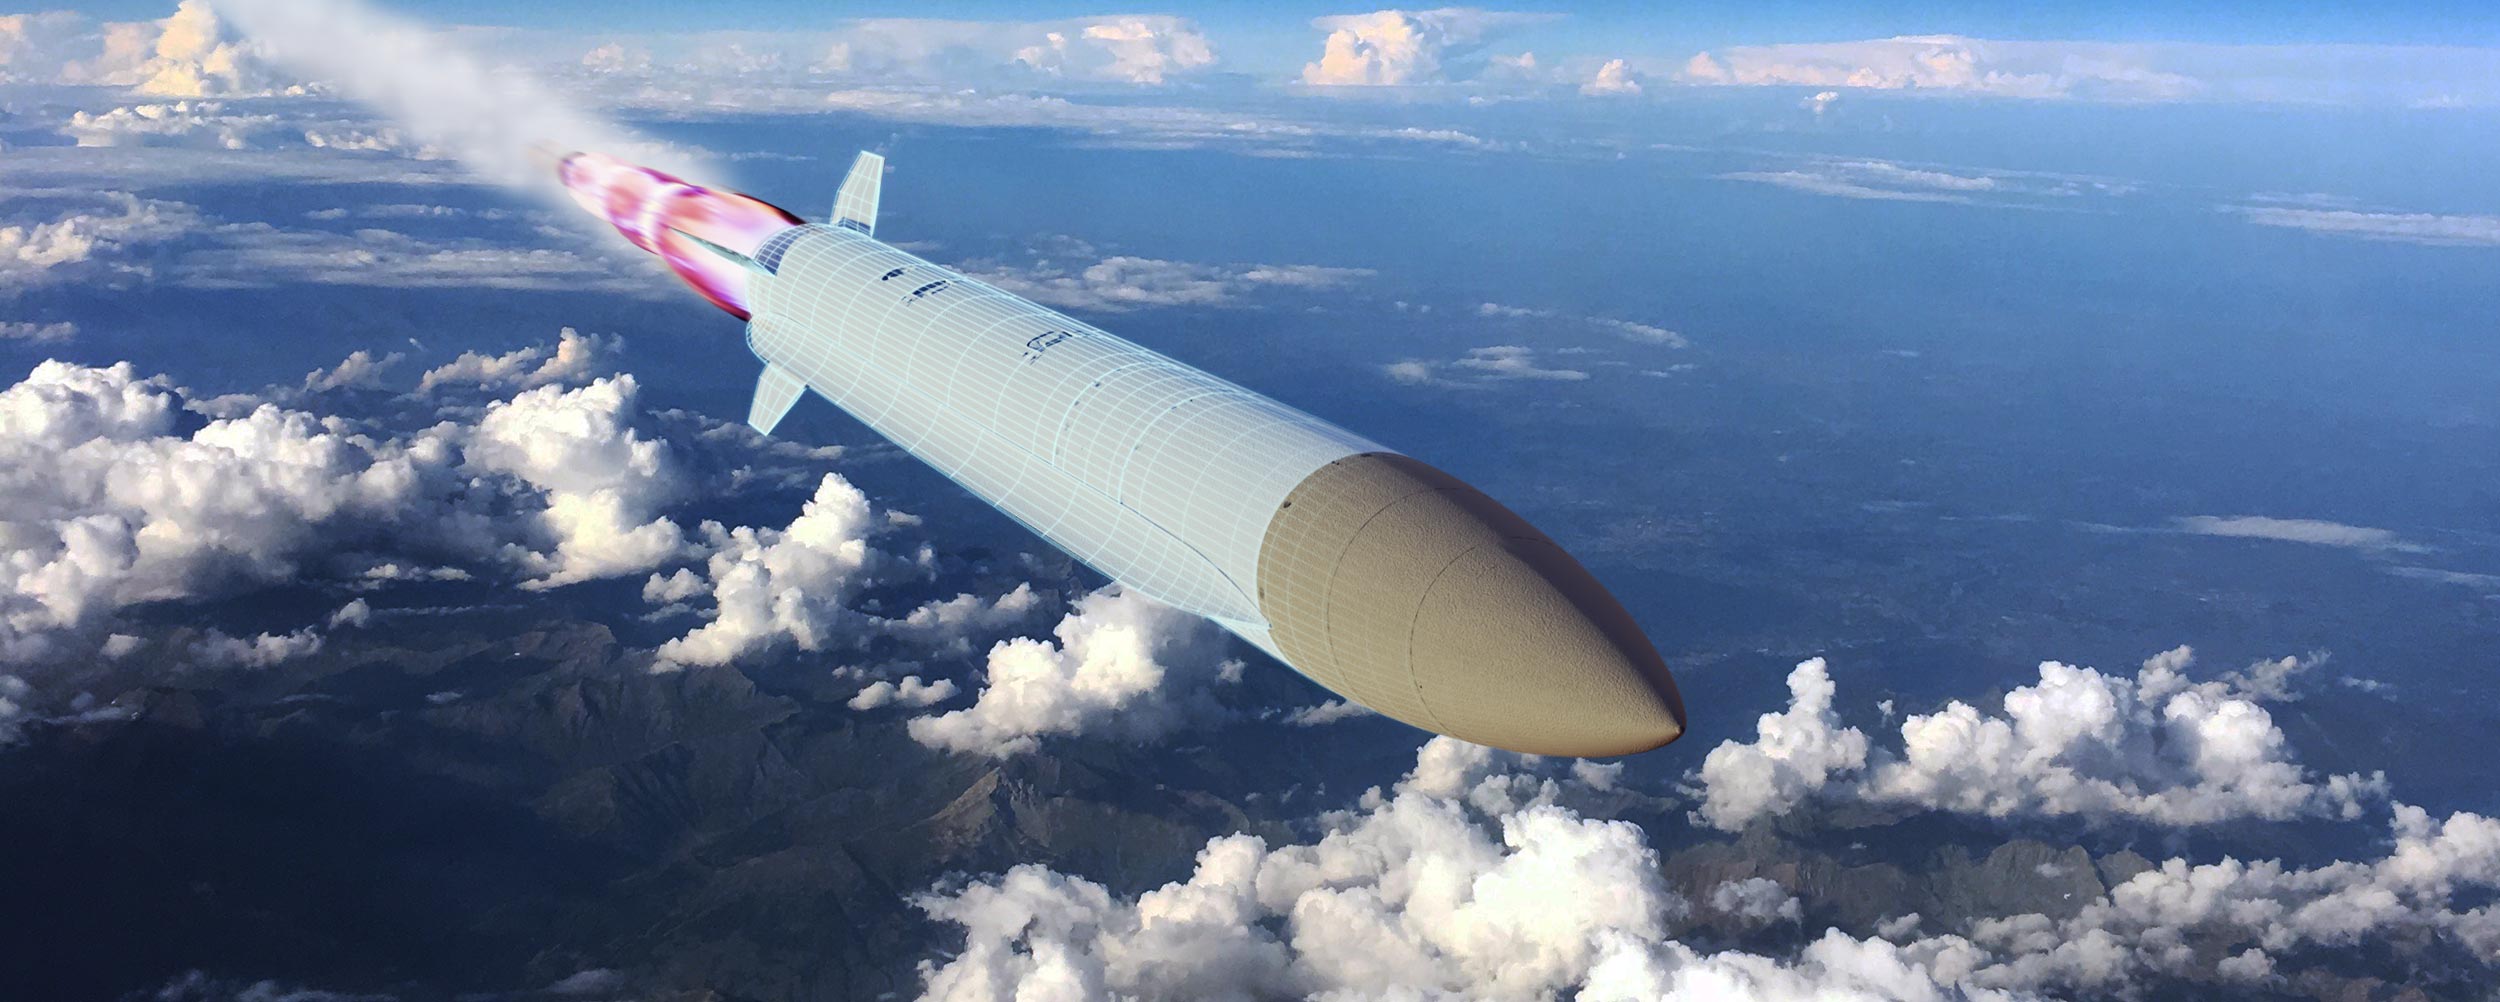 a digital rendering of a missile in air